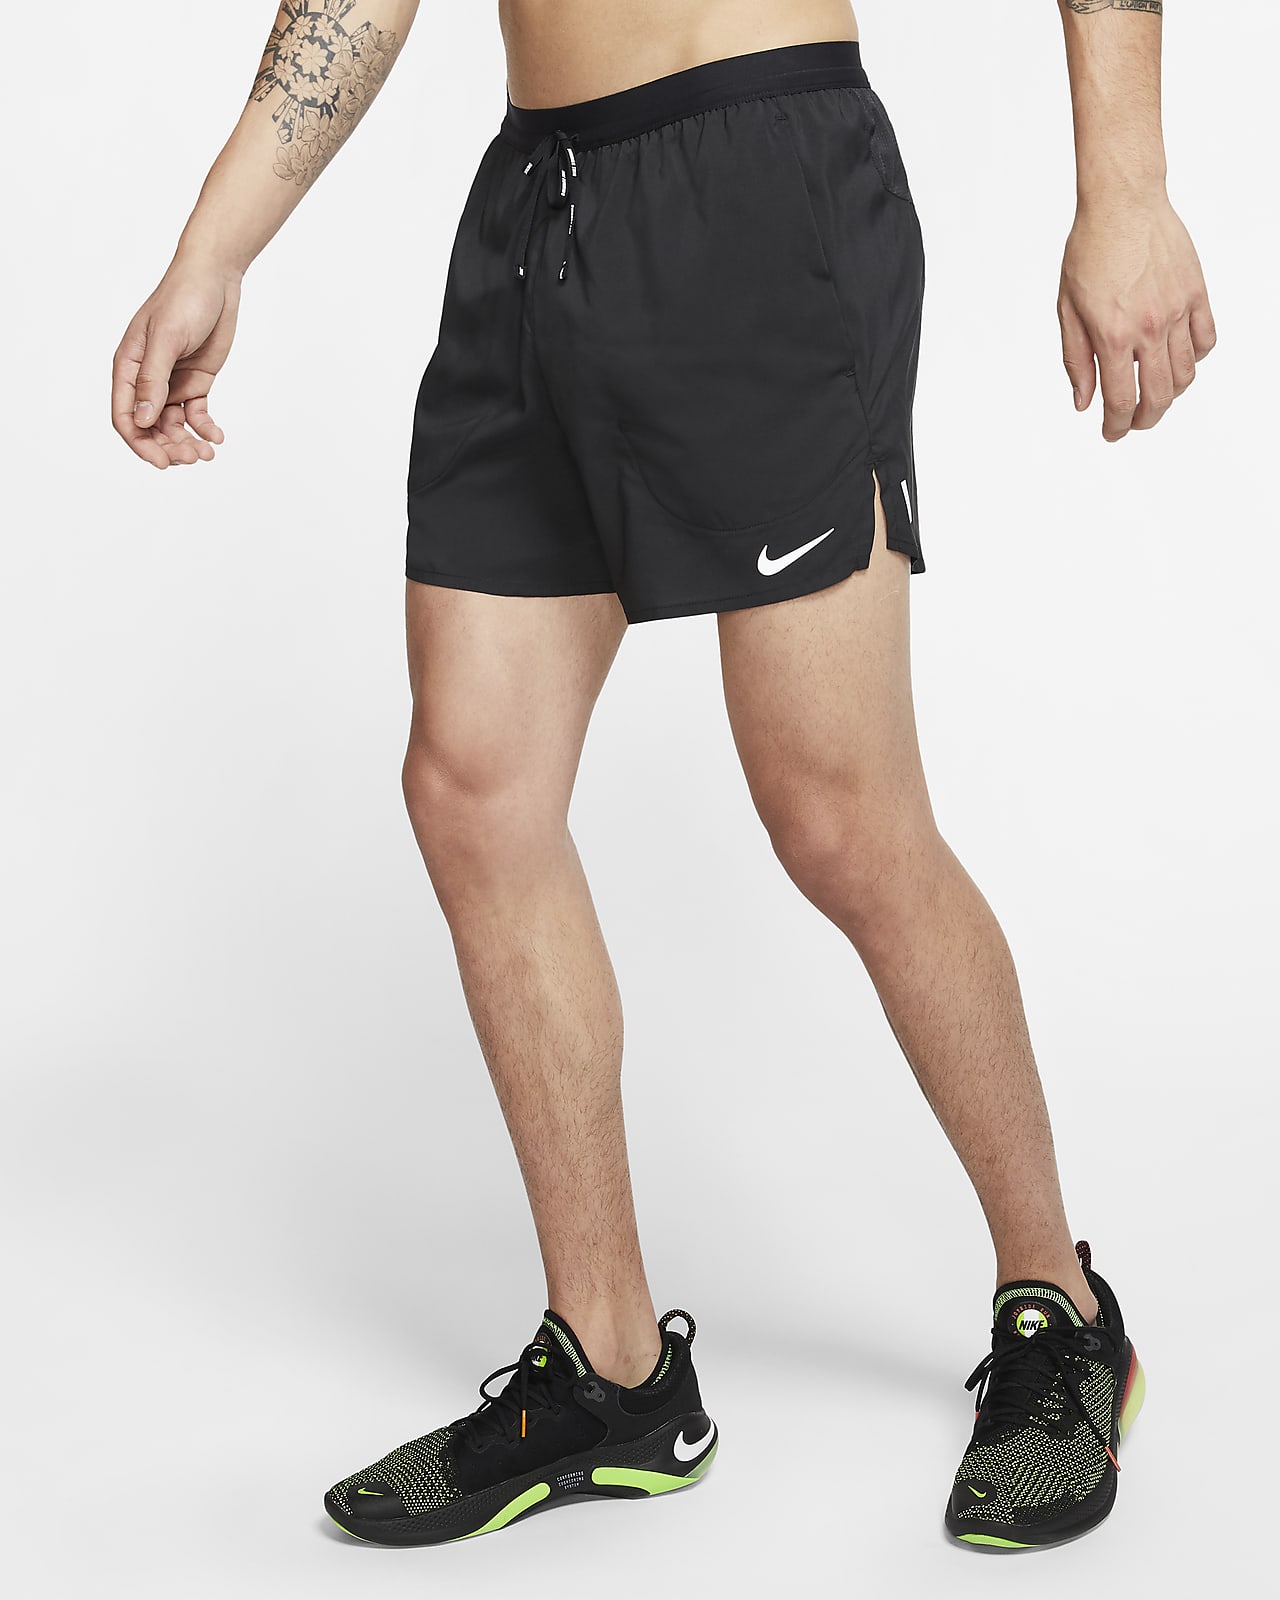 Brief Running Shorts. Nike LU